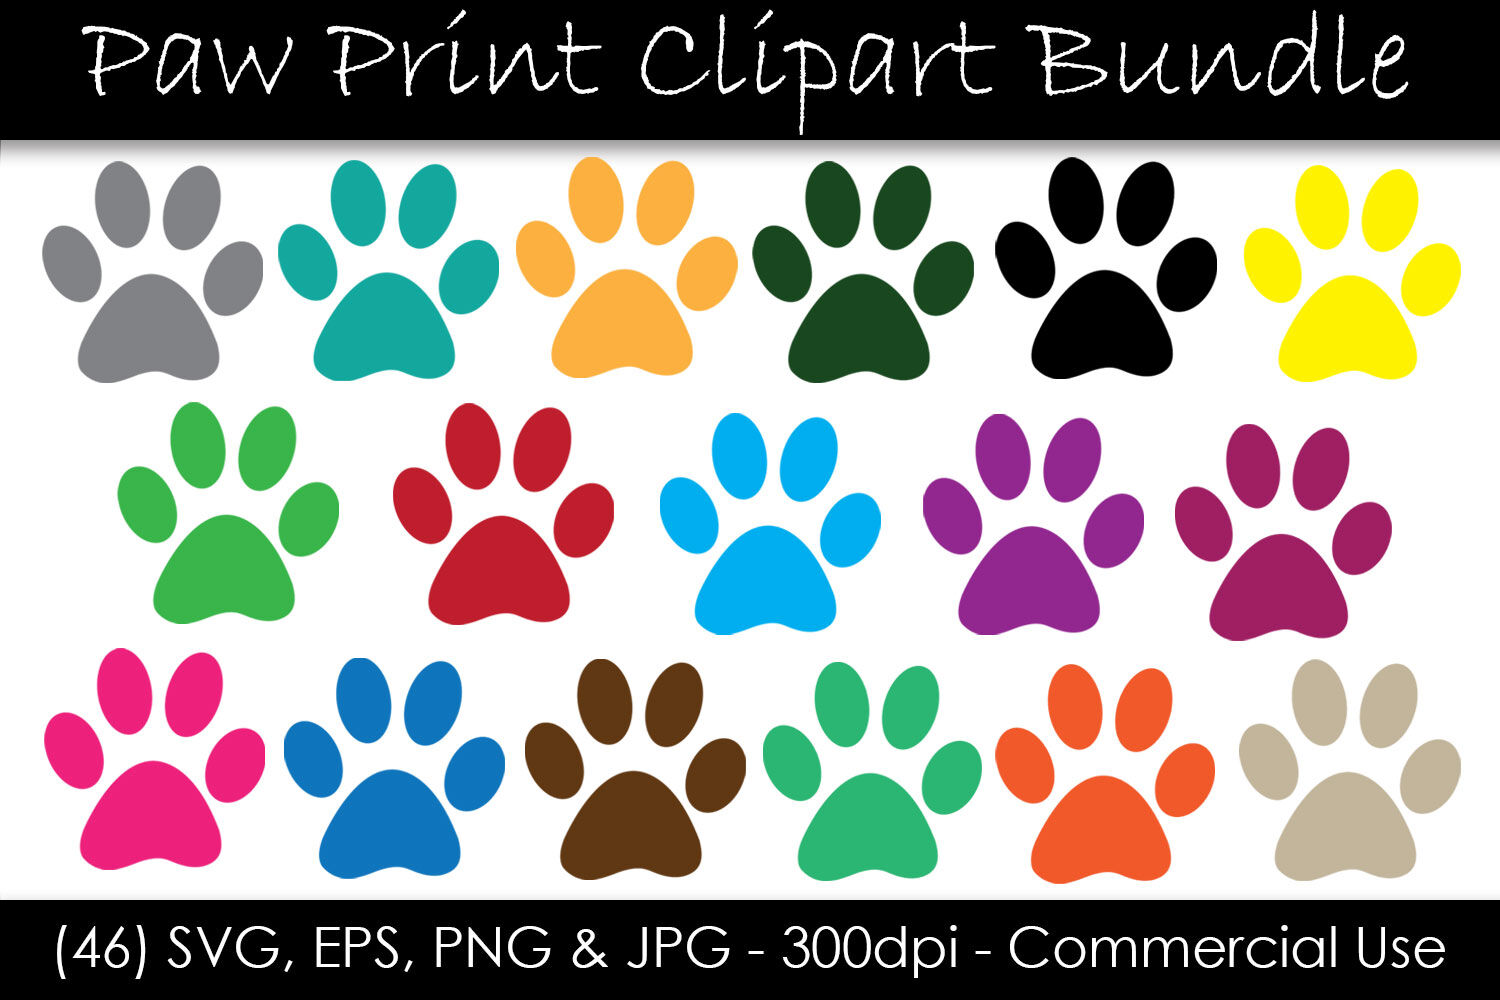 Download Cricut Paw Print Svg Free SVG Cut Files